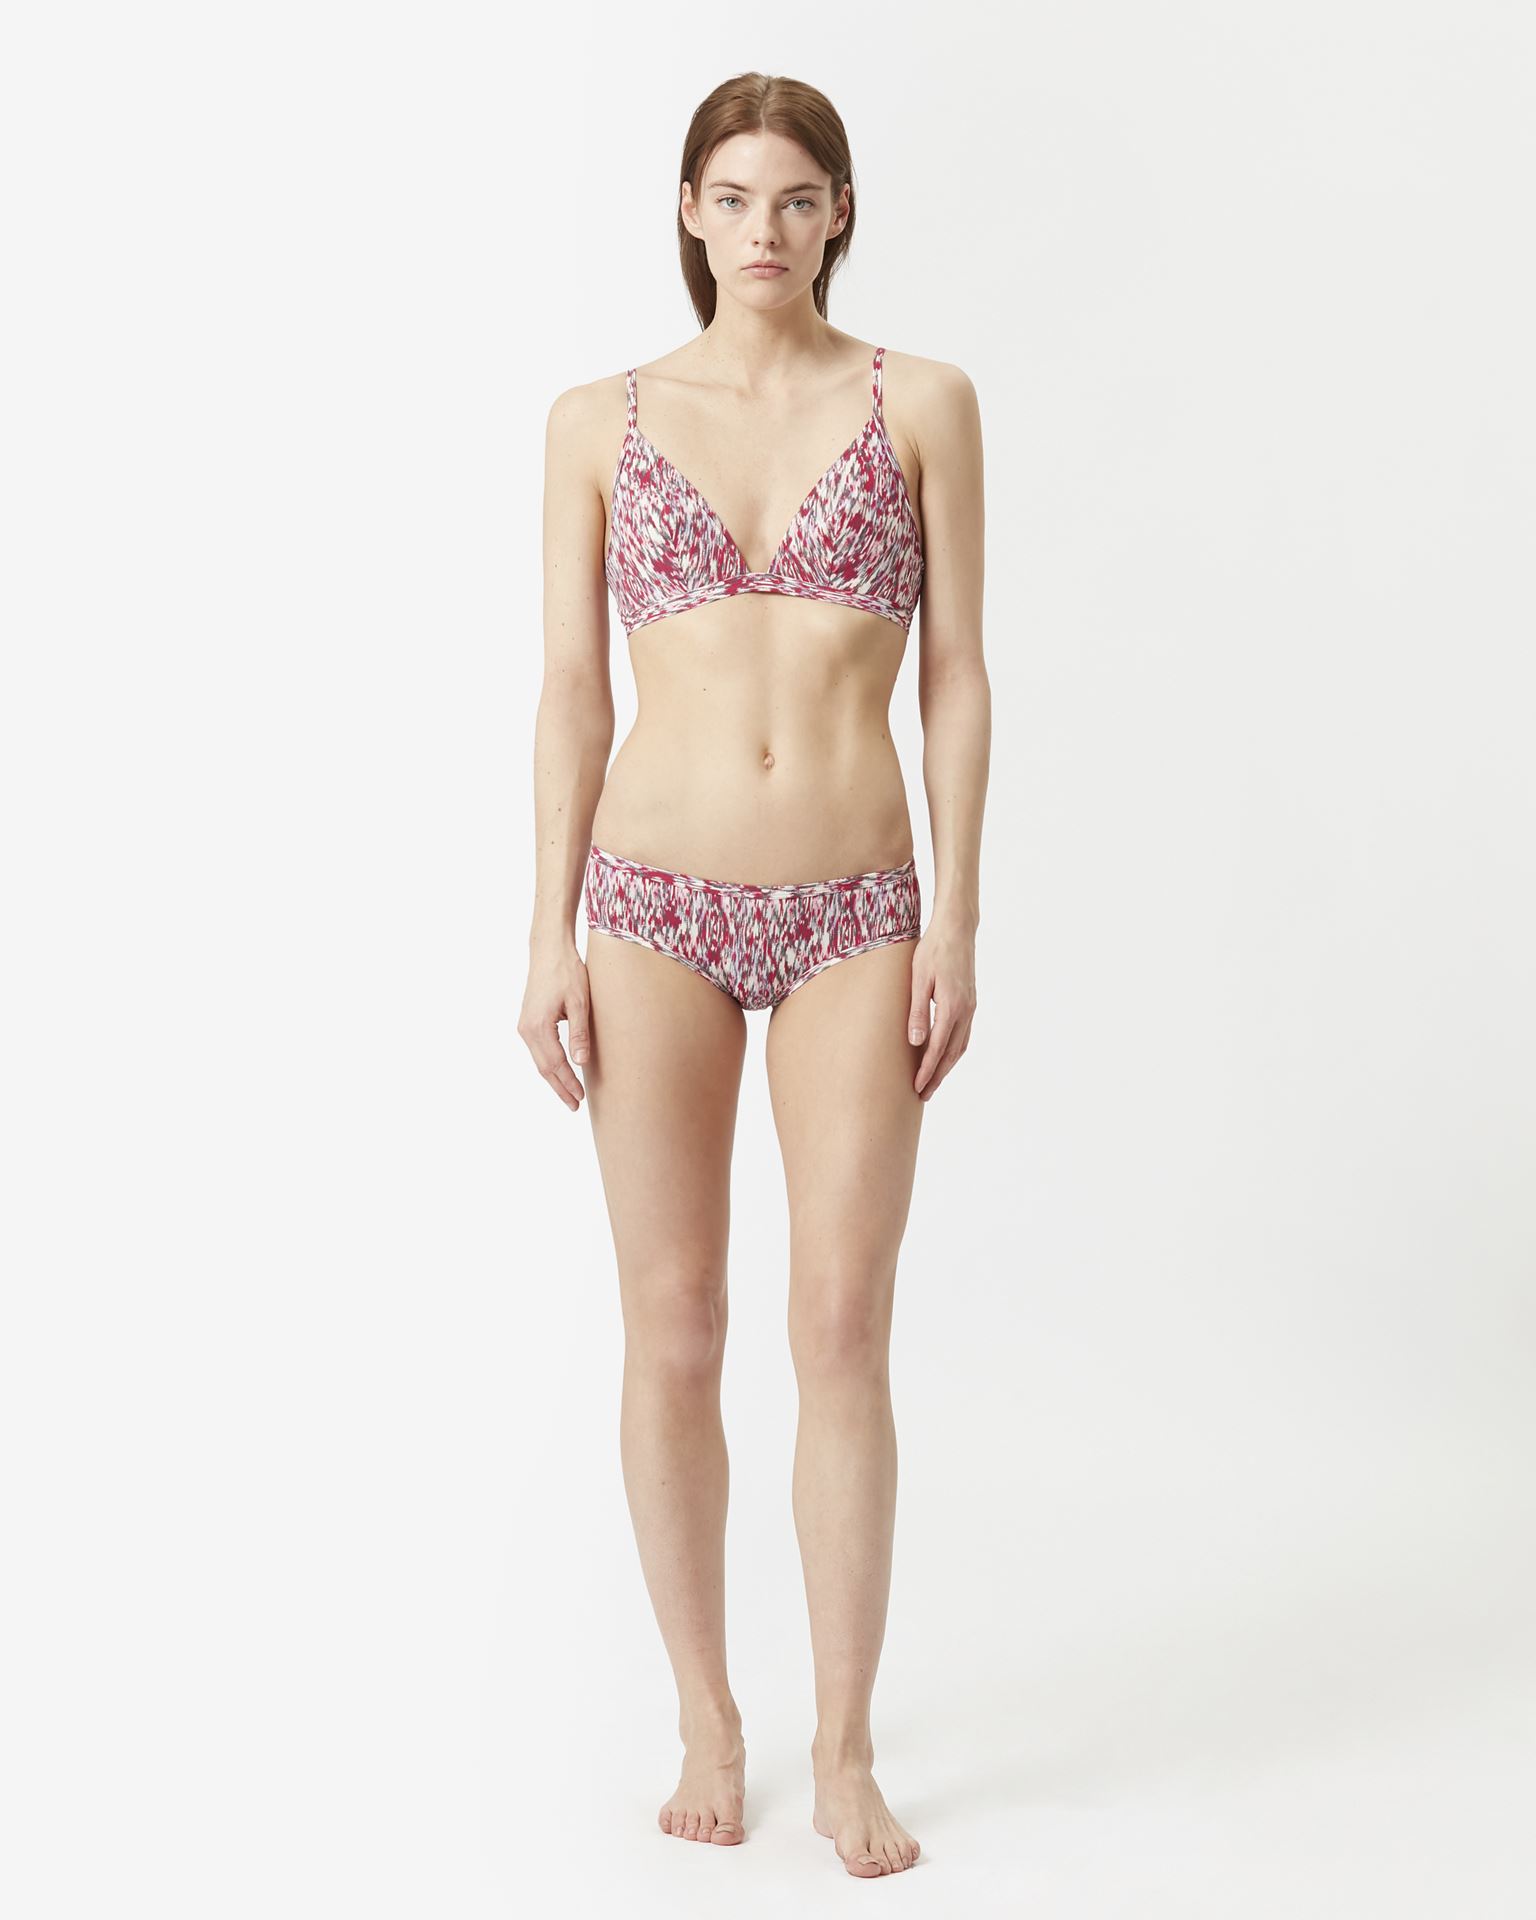 Isabel Marant Marant Étoile, Niall Camouflage Printed Bikini Top - Women - Pink